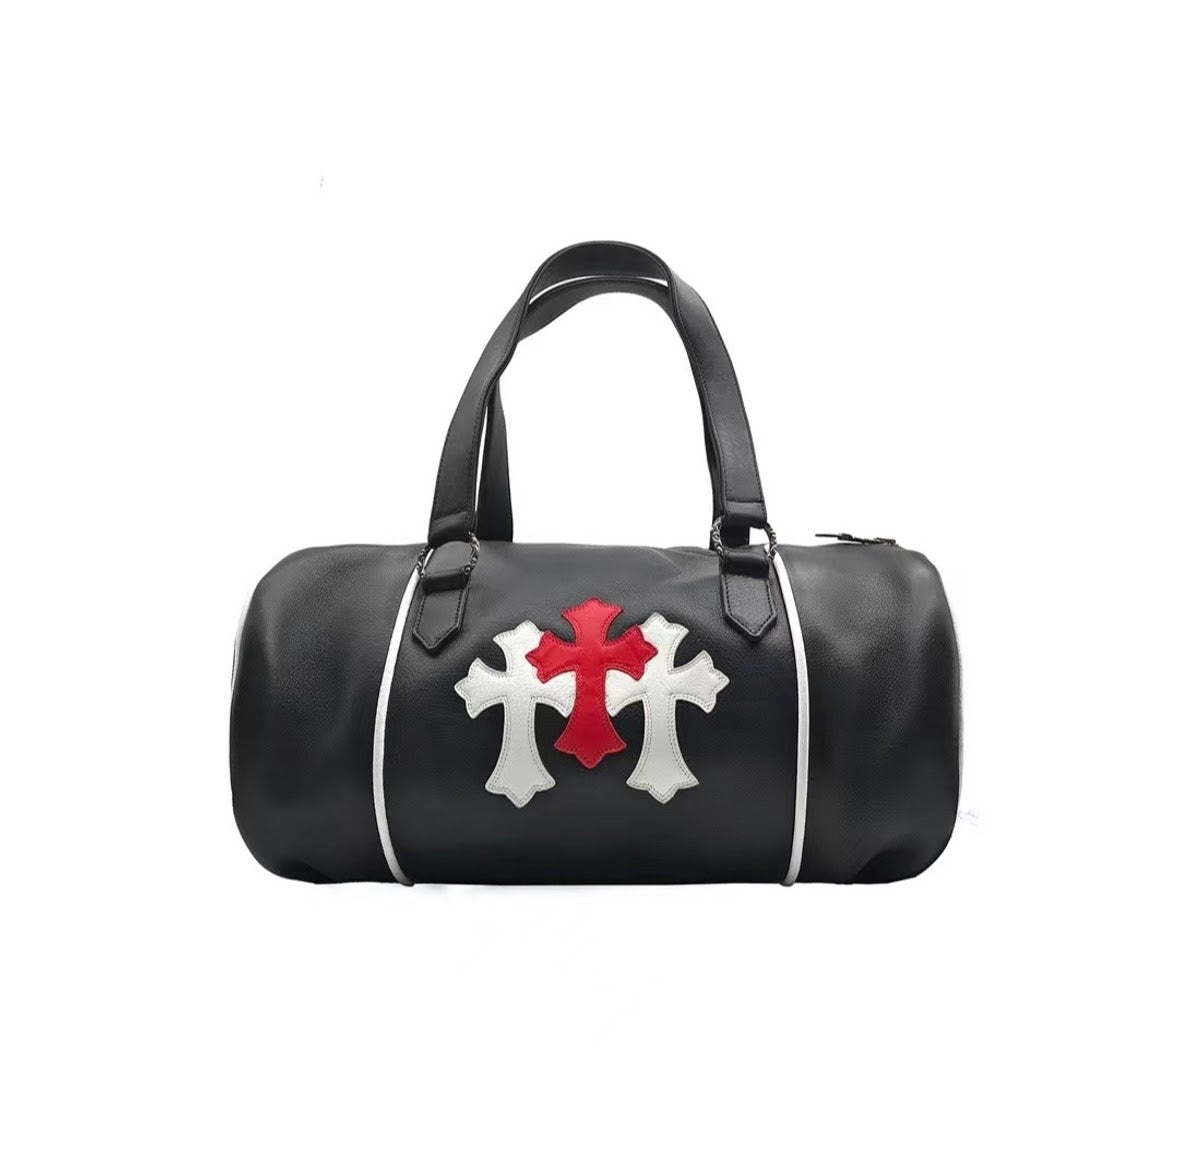 Chrome Hearts Cross Duffle Bag "Black"